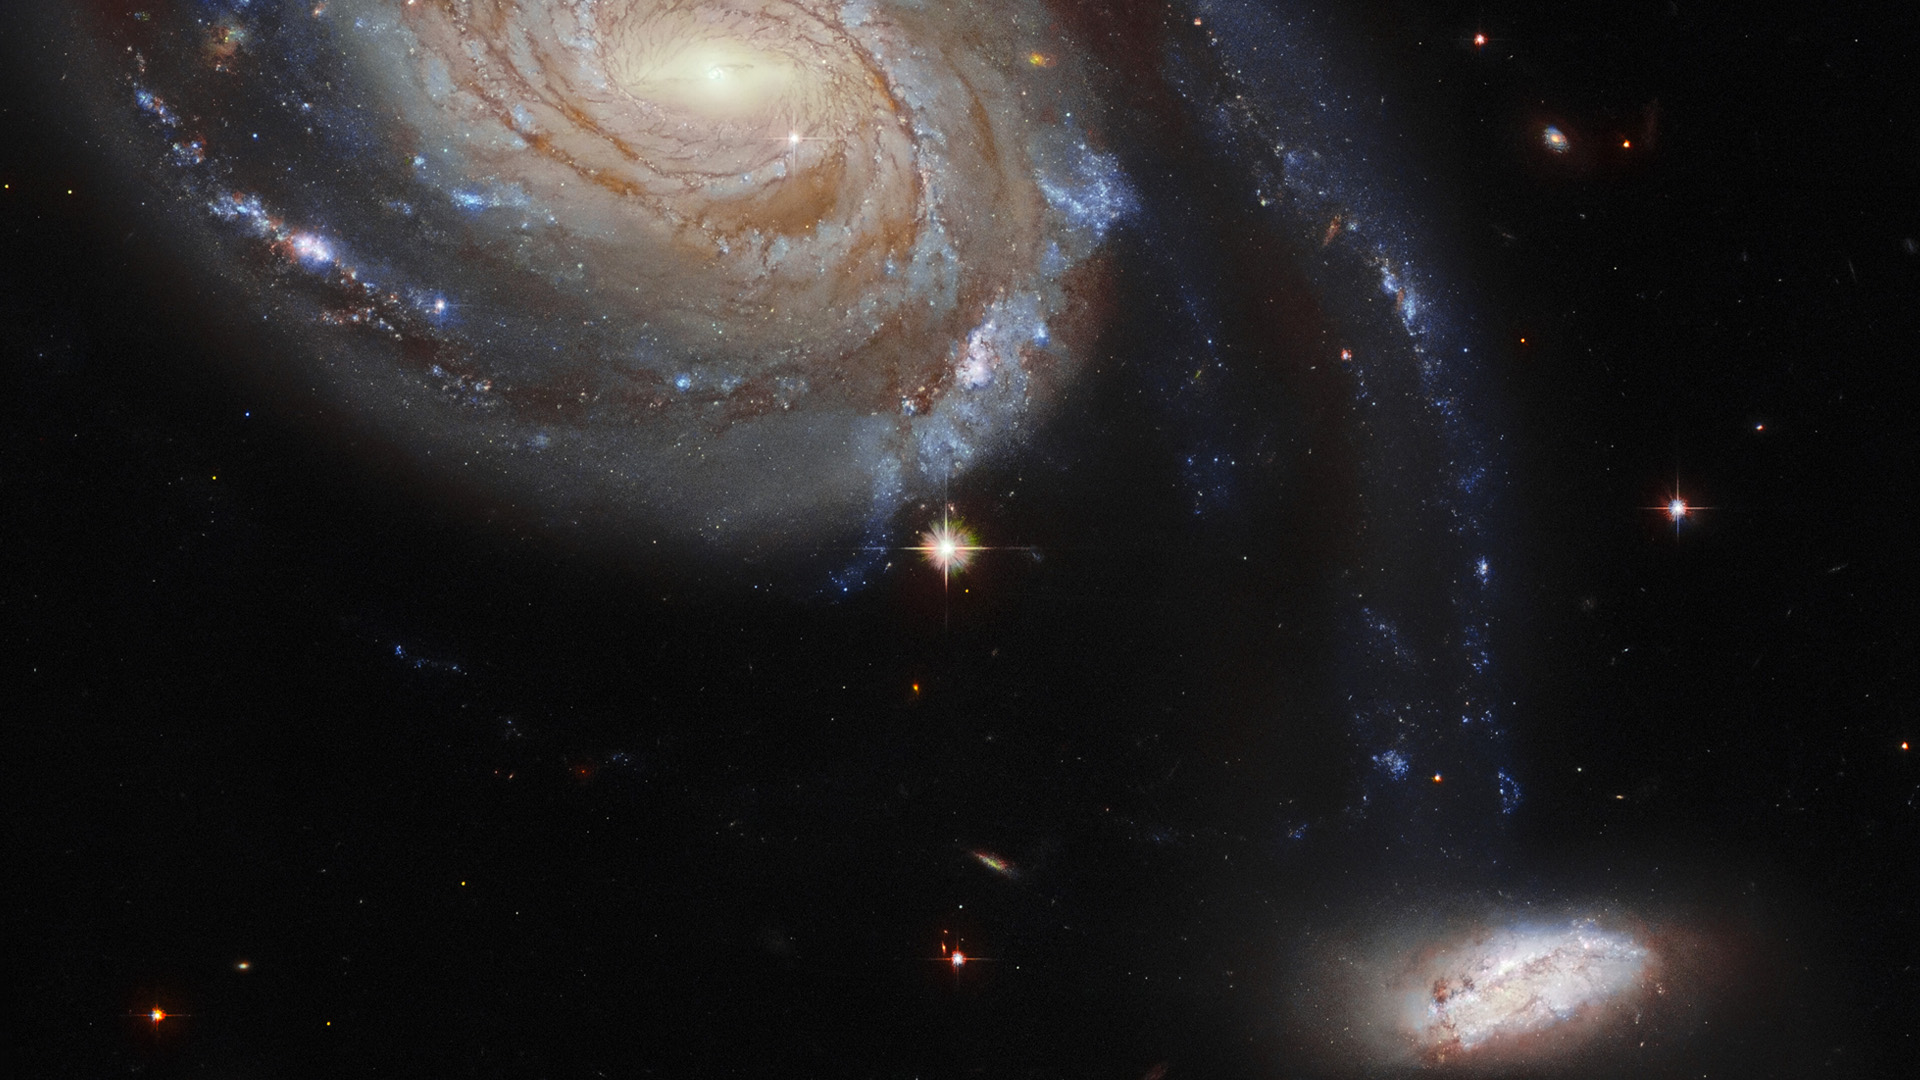 Hubble telescope spots a pair of ‘squabbling’ galaxies locked in cosmic dance